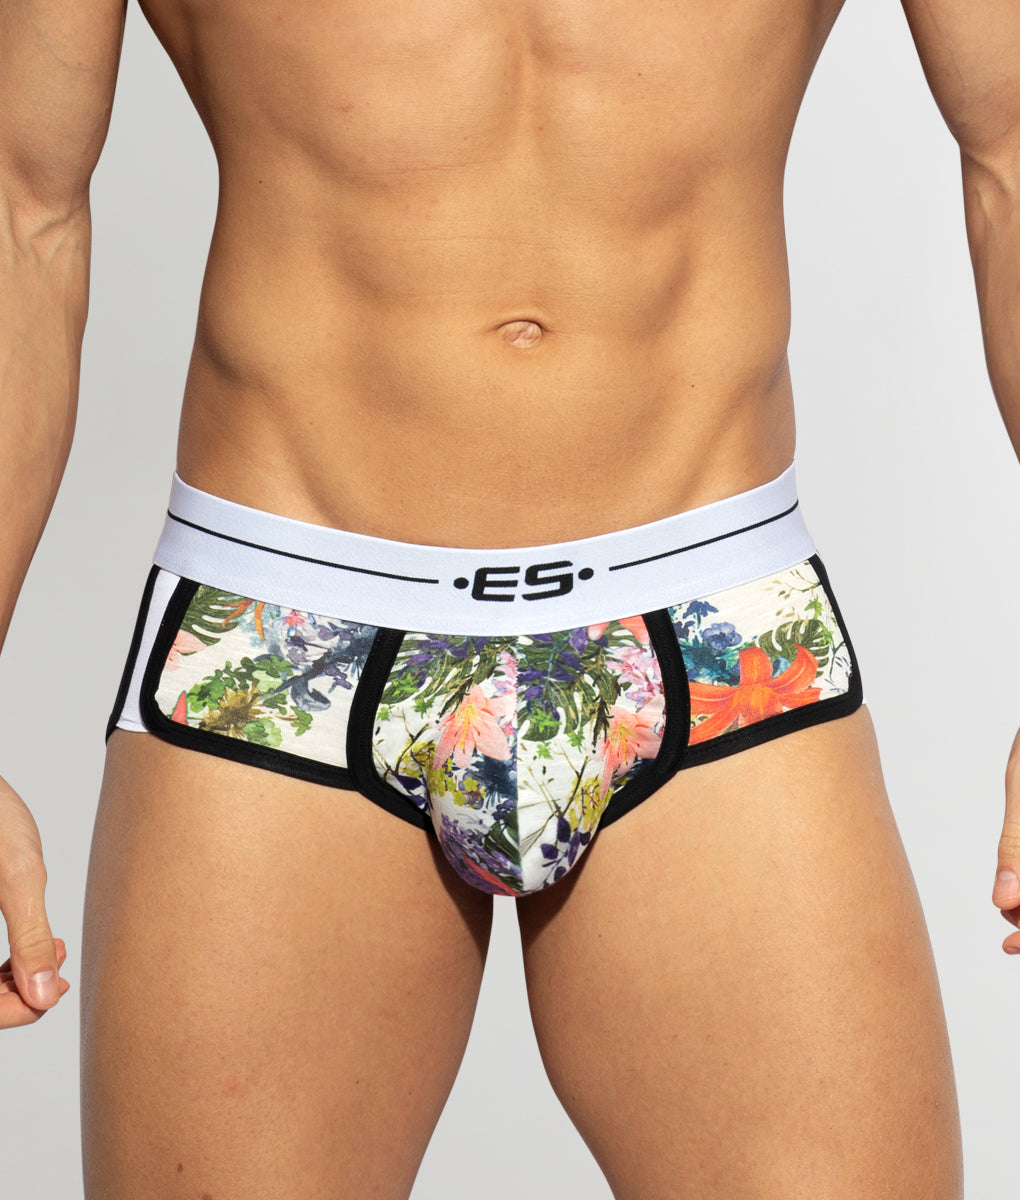 SPANX for Men Underwear at International Jock Underwear & Swimwear